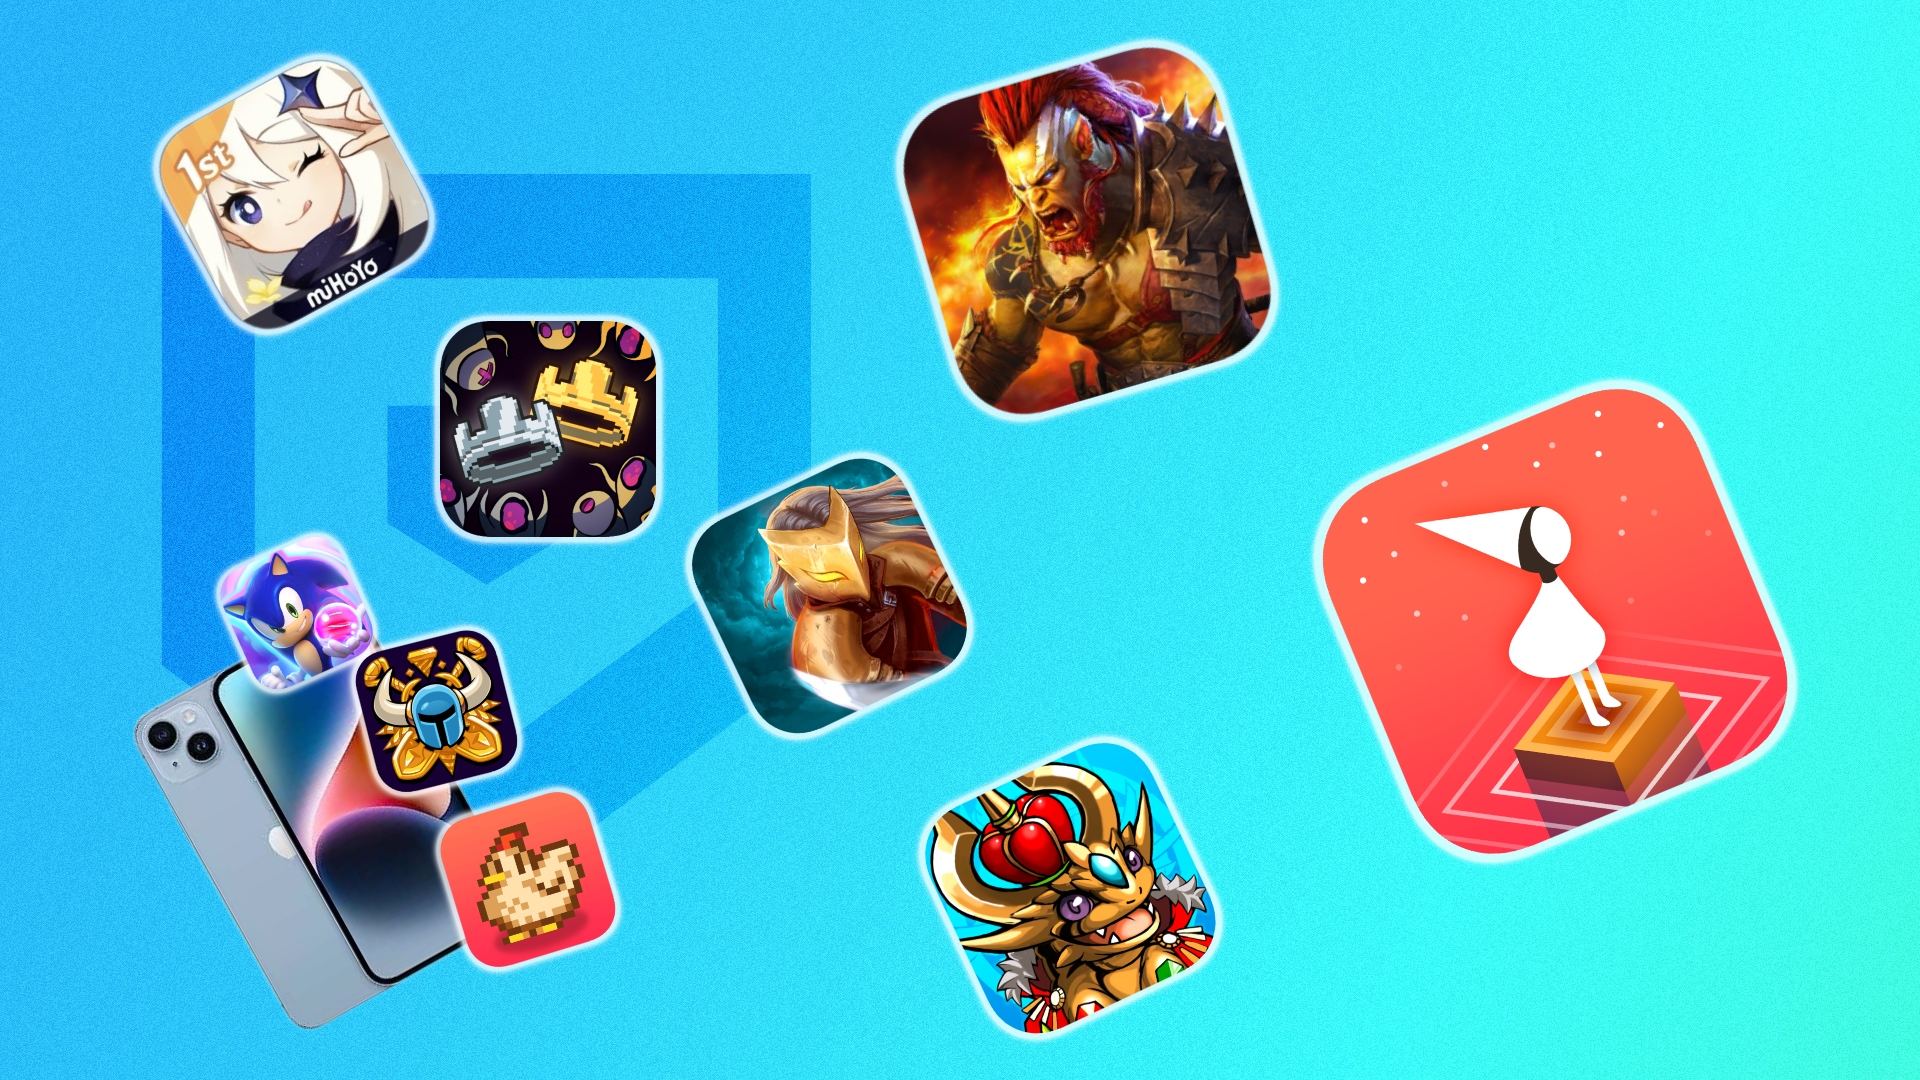 Games Iphone  Jogos iphone, Apps legais, Aplicativo para iphone